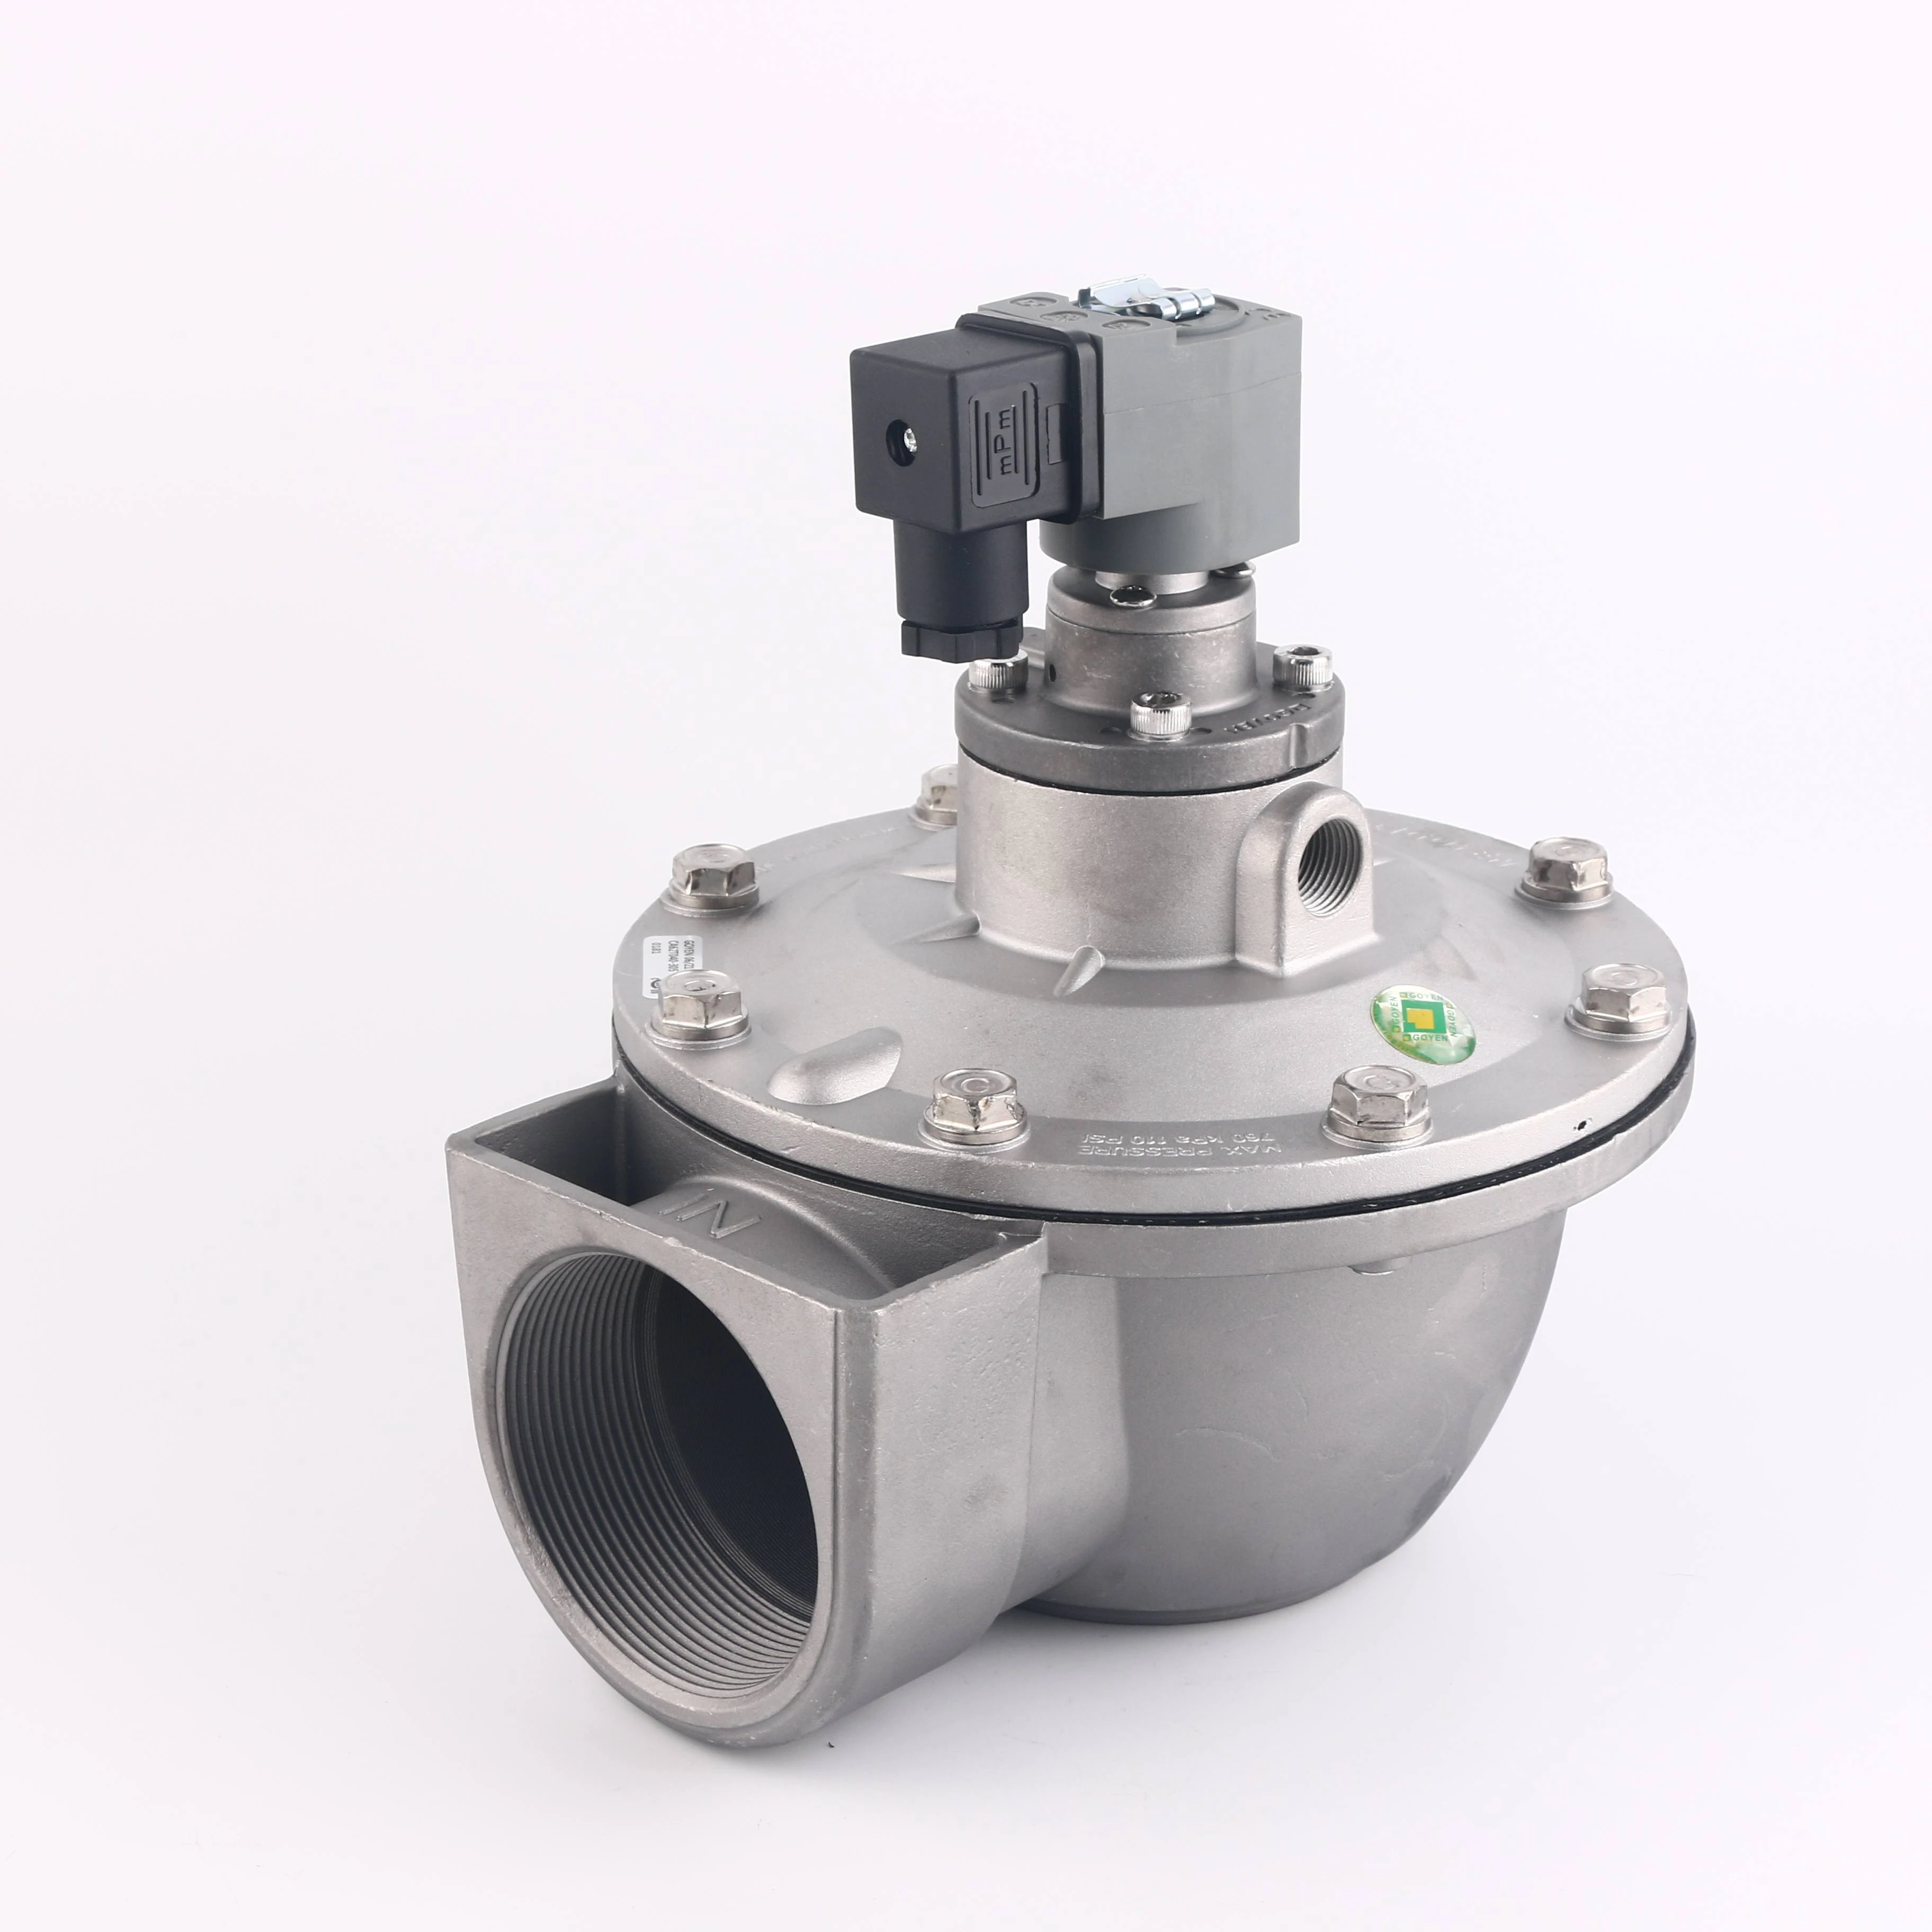 

GOYEN CA RCA62T pulse jet valve environmental bag filter solenoid valve diaphragm kit,